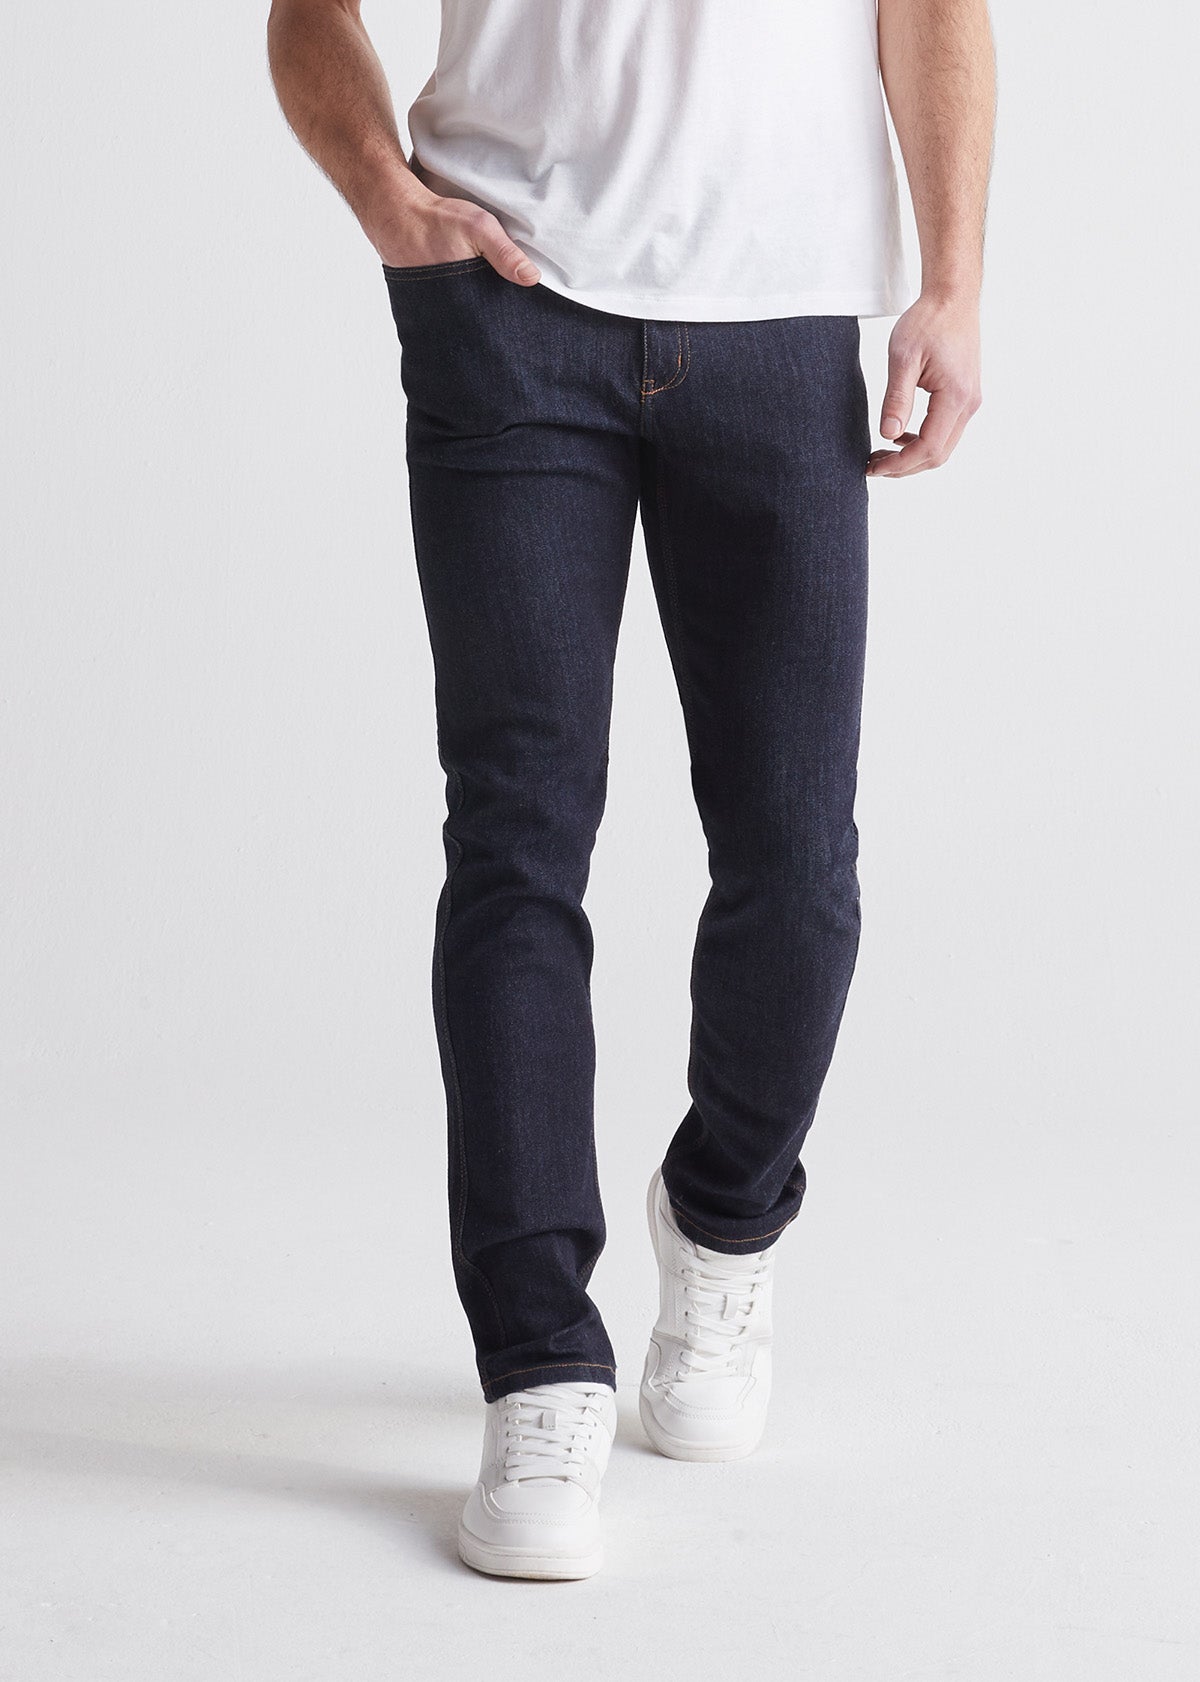 Pants for Short Men  Mens Jeans, Chinos, Joggers, Dress Pants